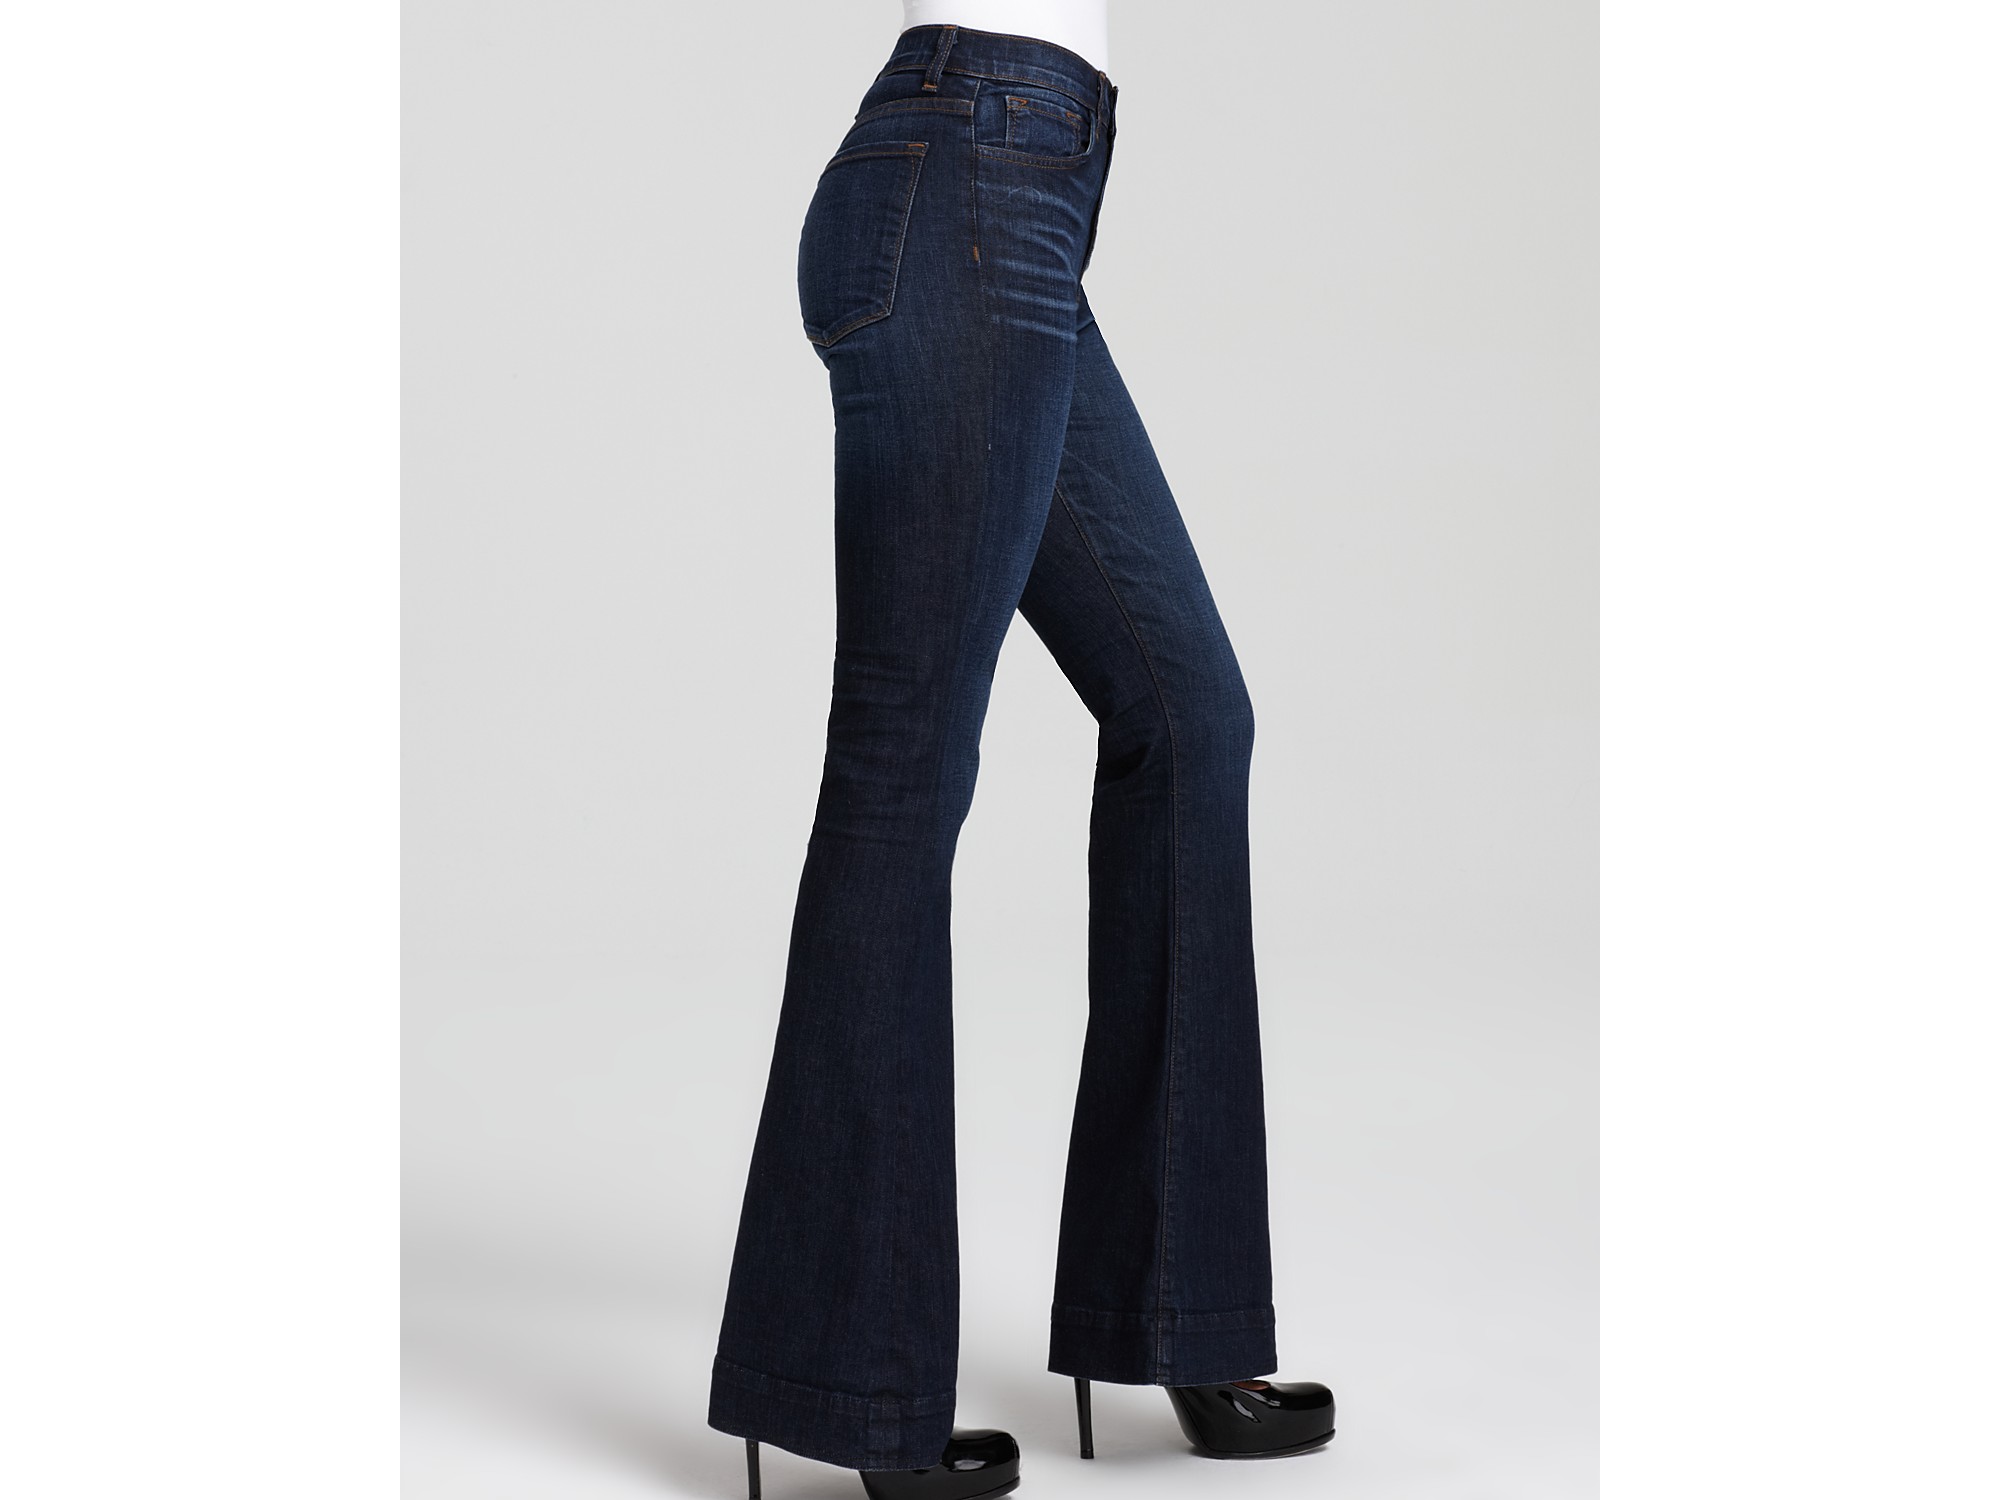 Lyst - Ash J Brand Bianca High Rise Skinny Flare Jeans in Monaco Wash ...